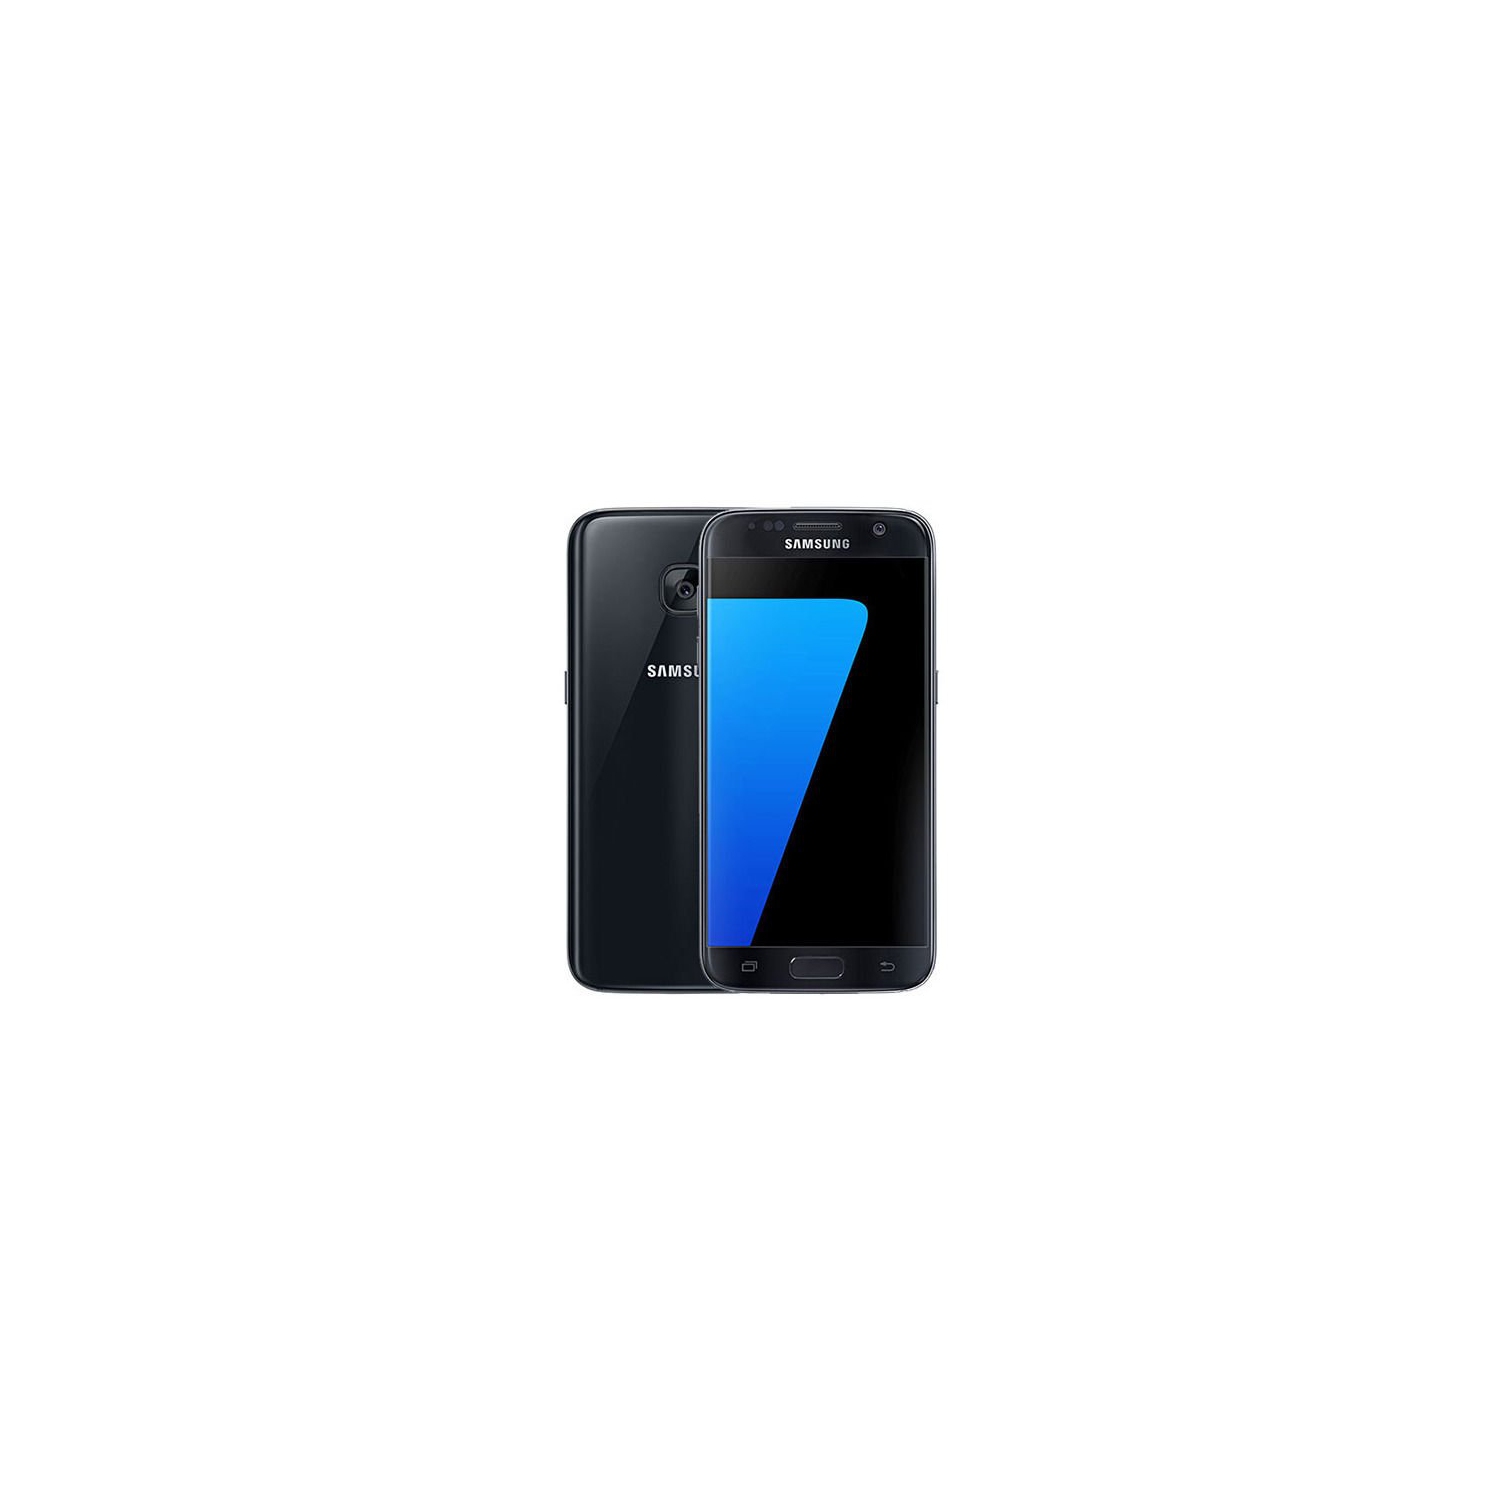 Samsung Galaxy S7 32GB Smartphone - Black Onyx - Unlocked - Open Box